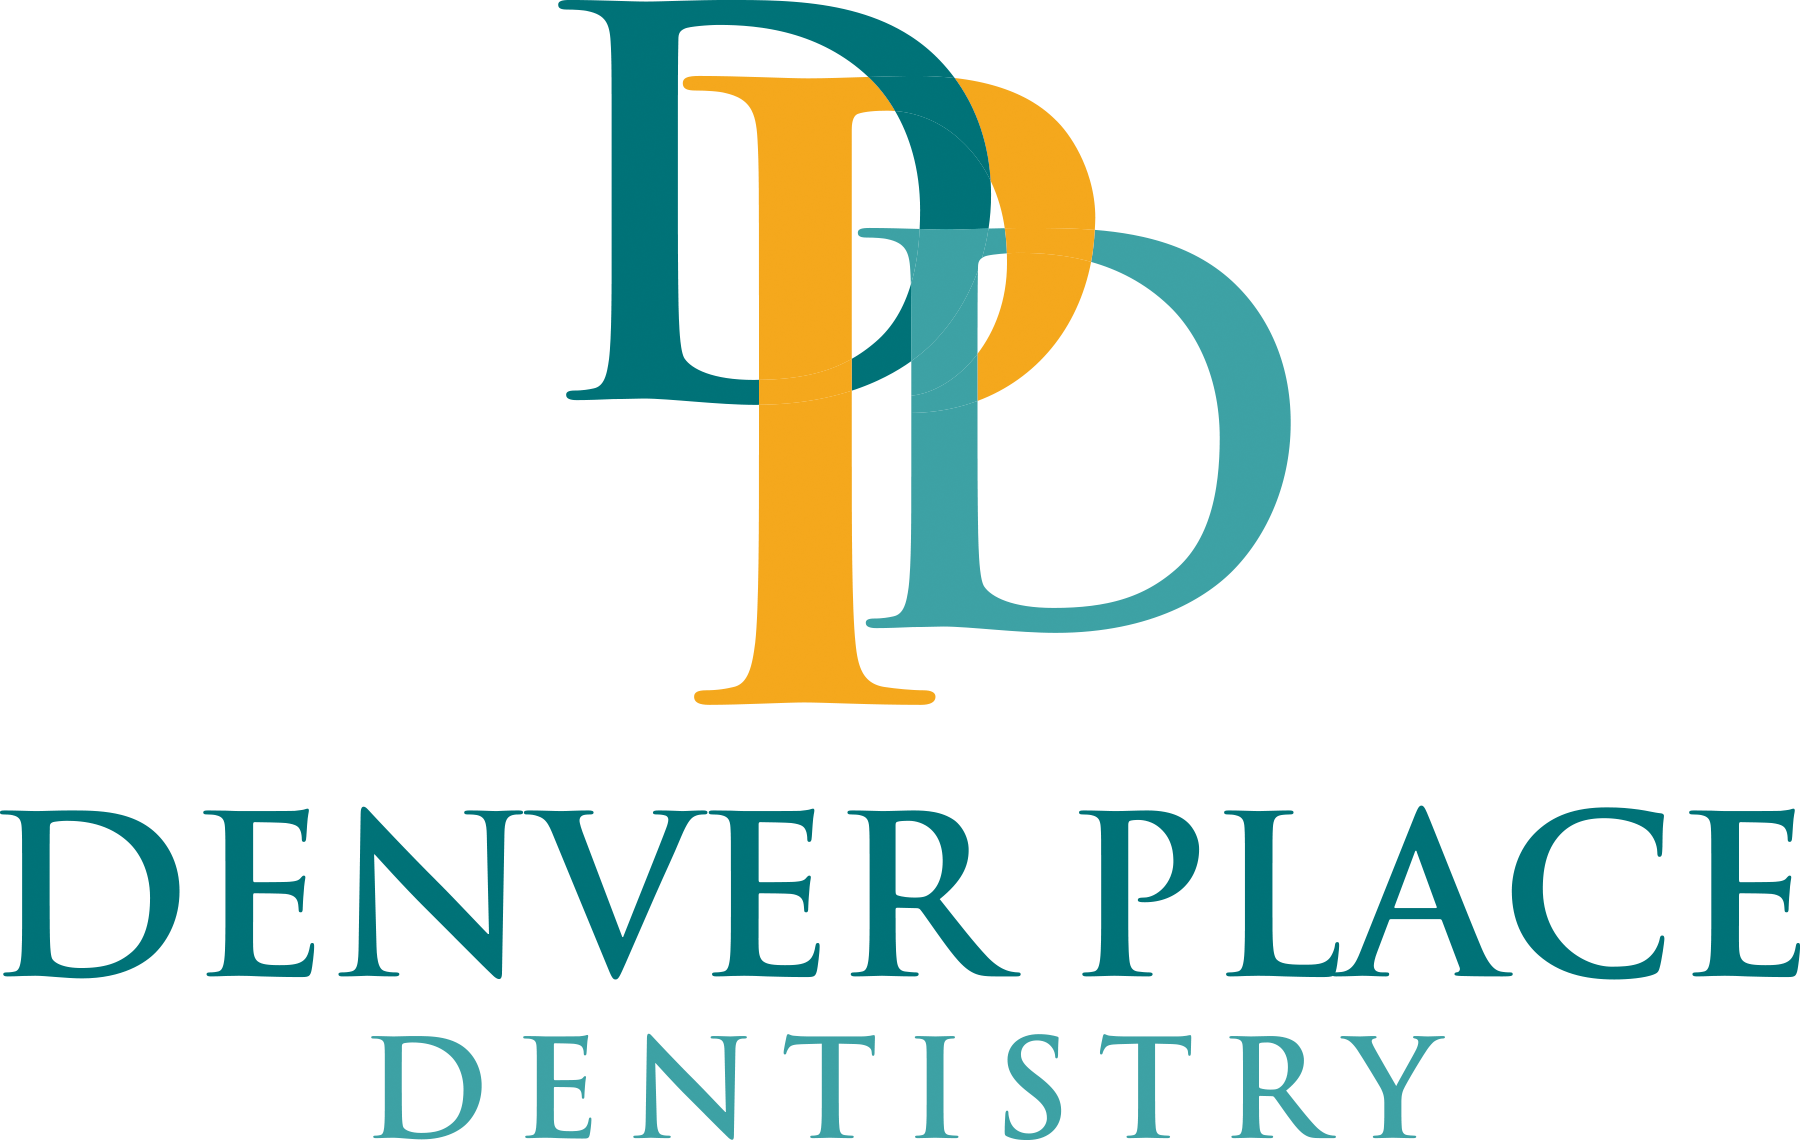 Denver Place Dentistry logo